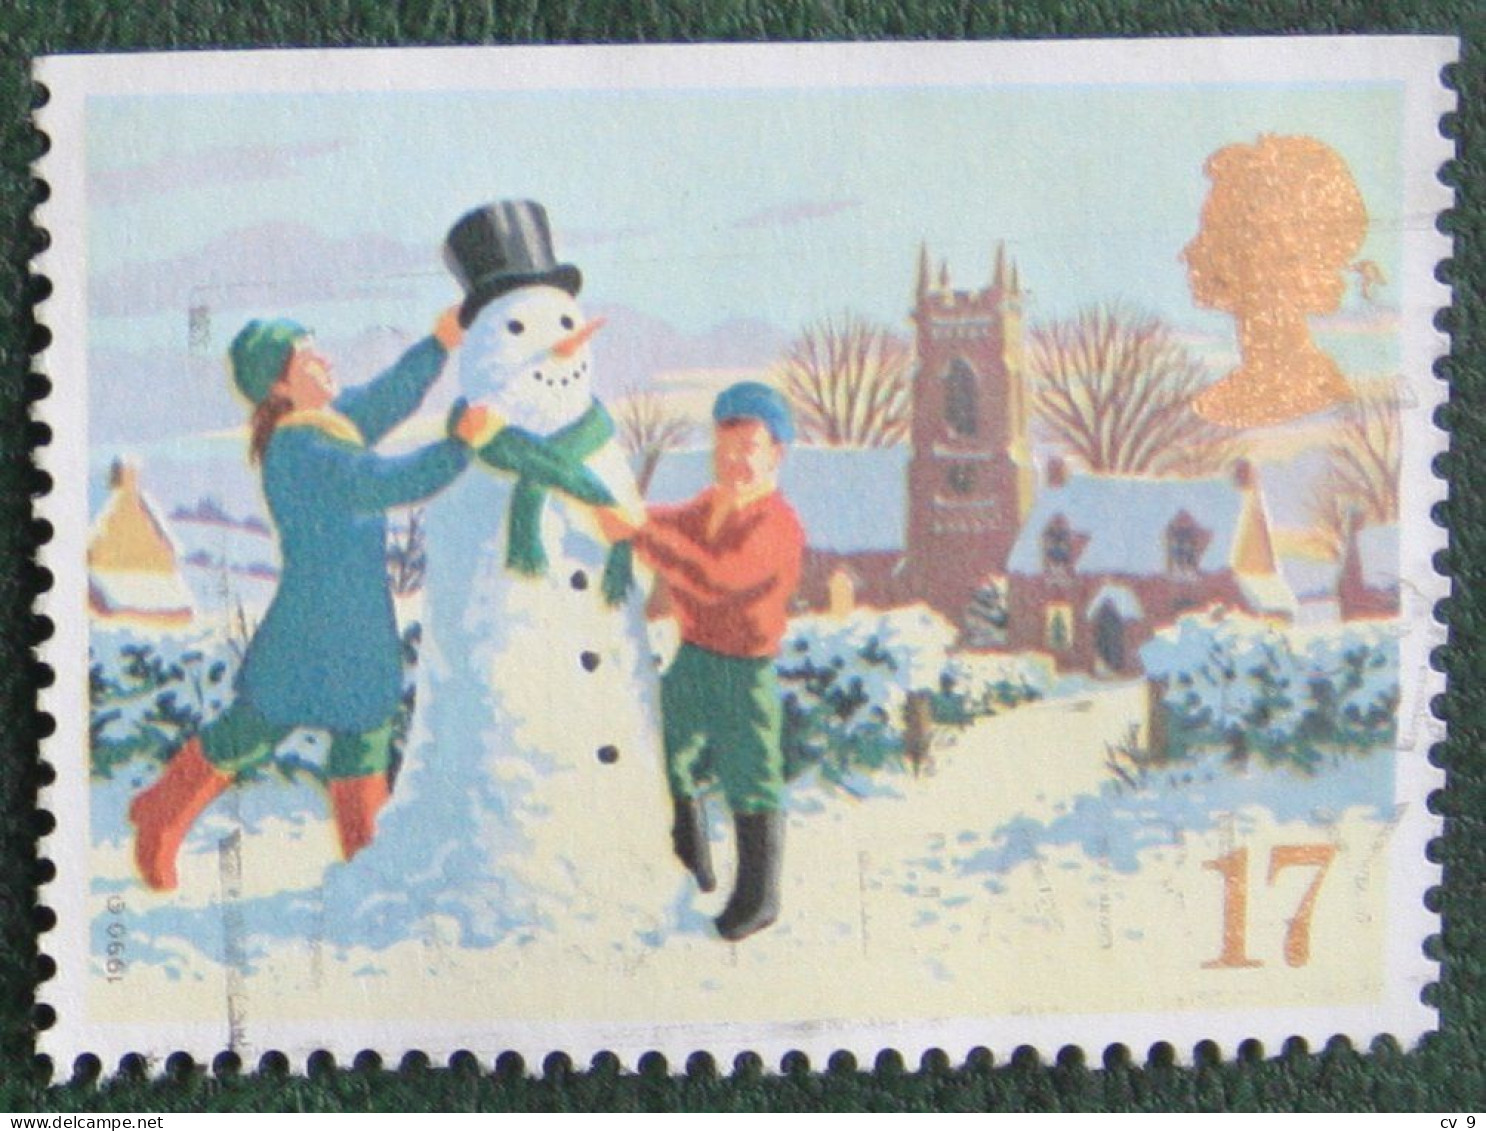 Natale Weihnachten Xmas Noel (Mi 1300 Do) 1990 Used Gebruikt Oblitere ENGLAND GRANDE-BRETAGNE GB GREAT BRITAIN - Used Stamps